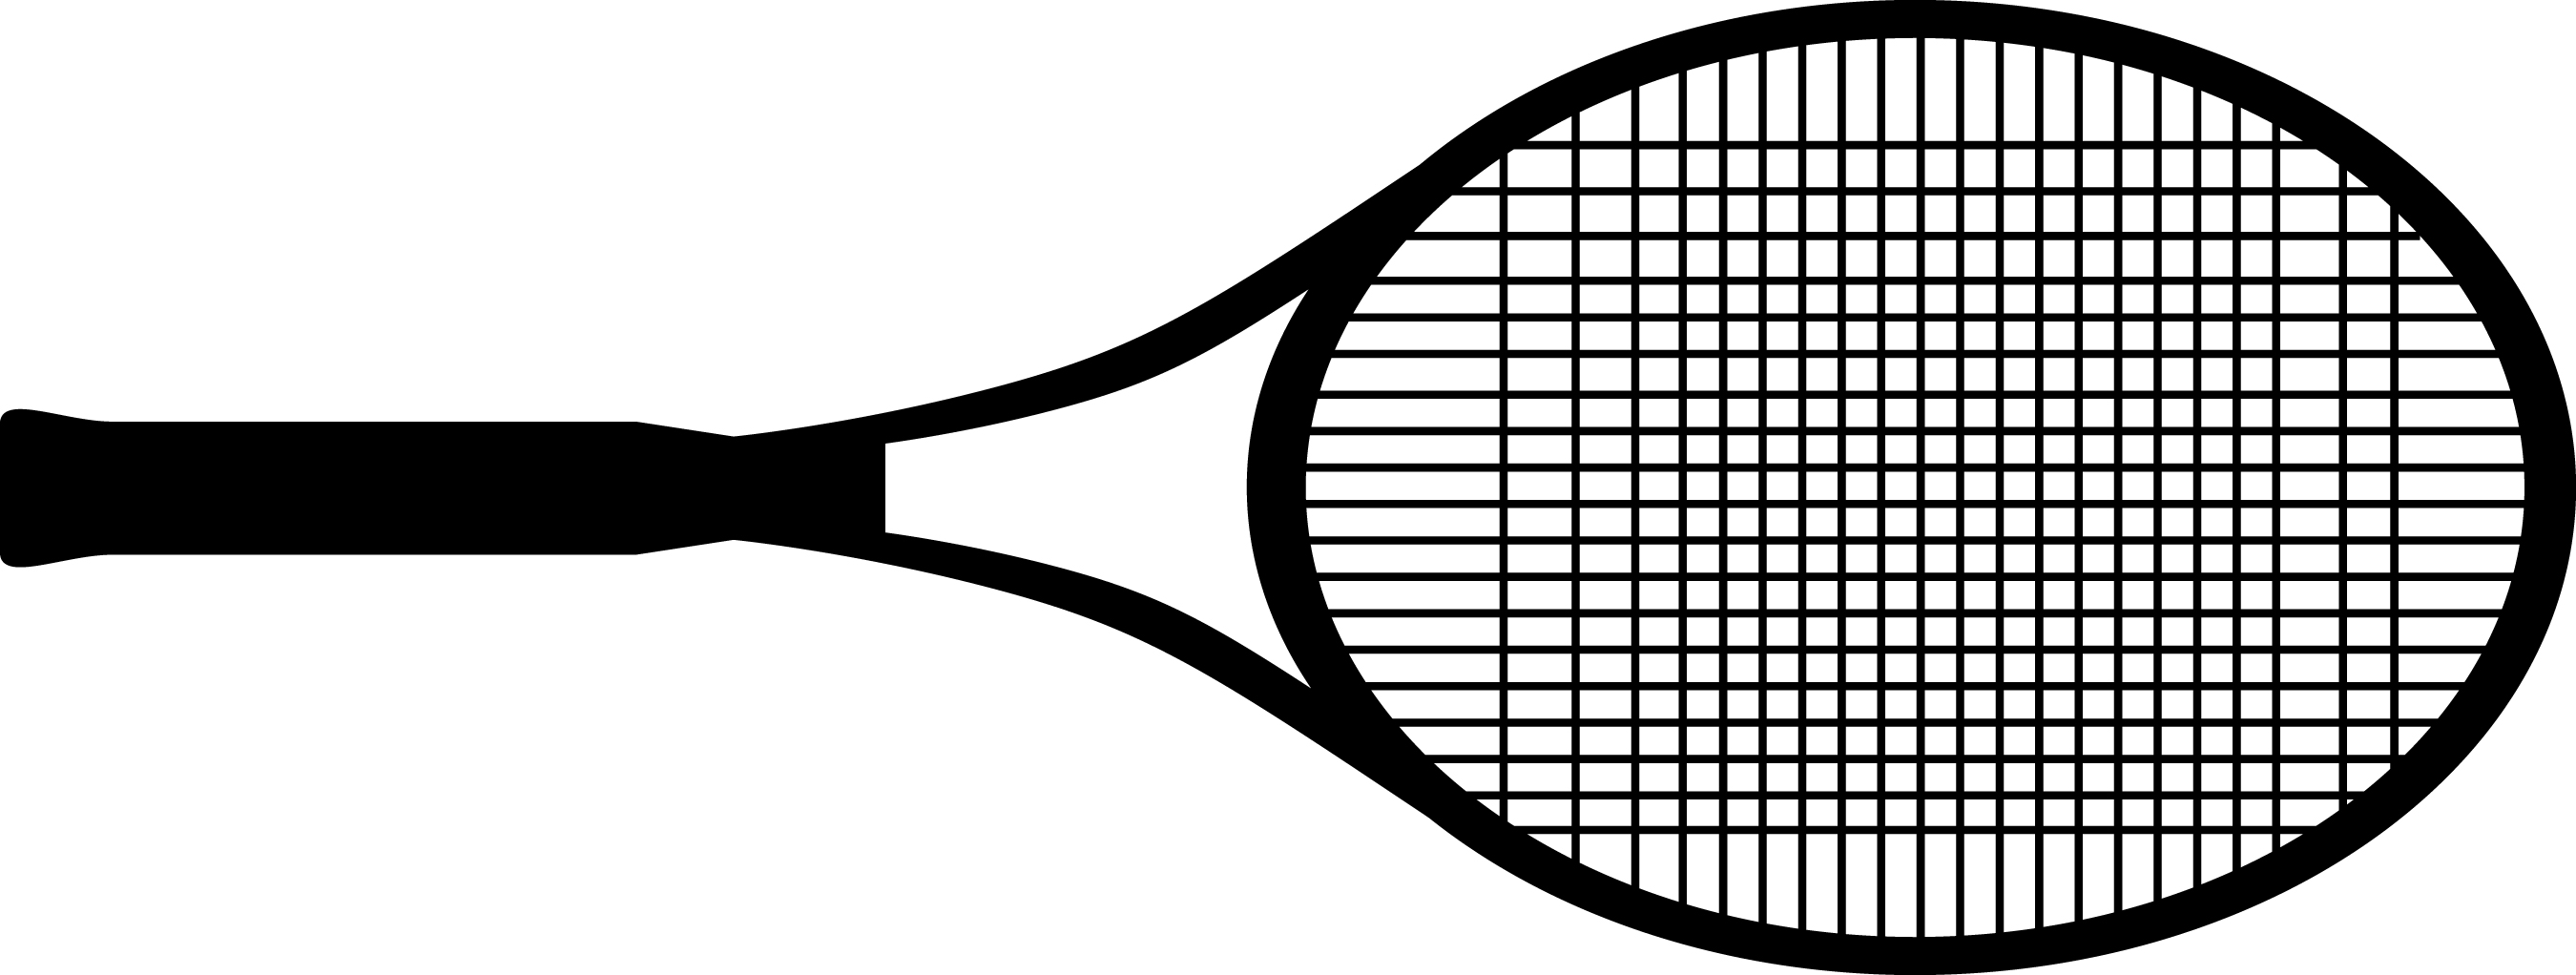 Tennis Racket Clip Art Black And White Tennis Racket Equipment Svg